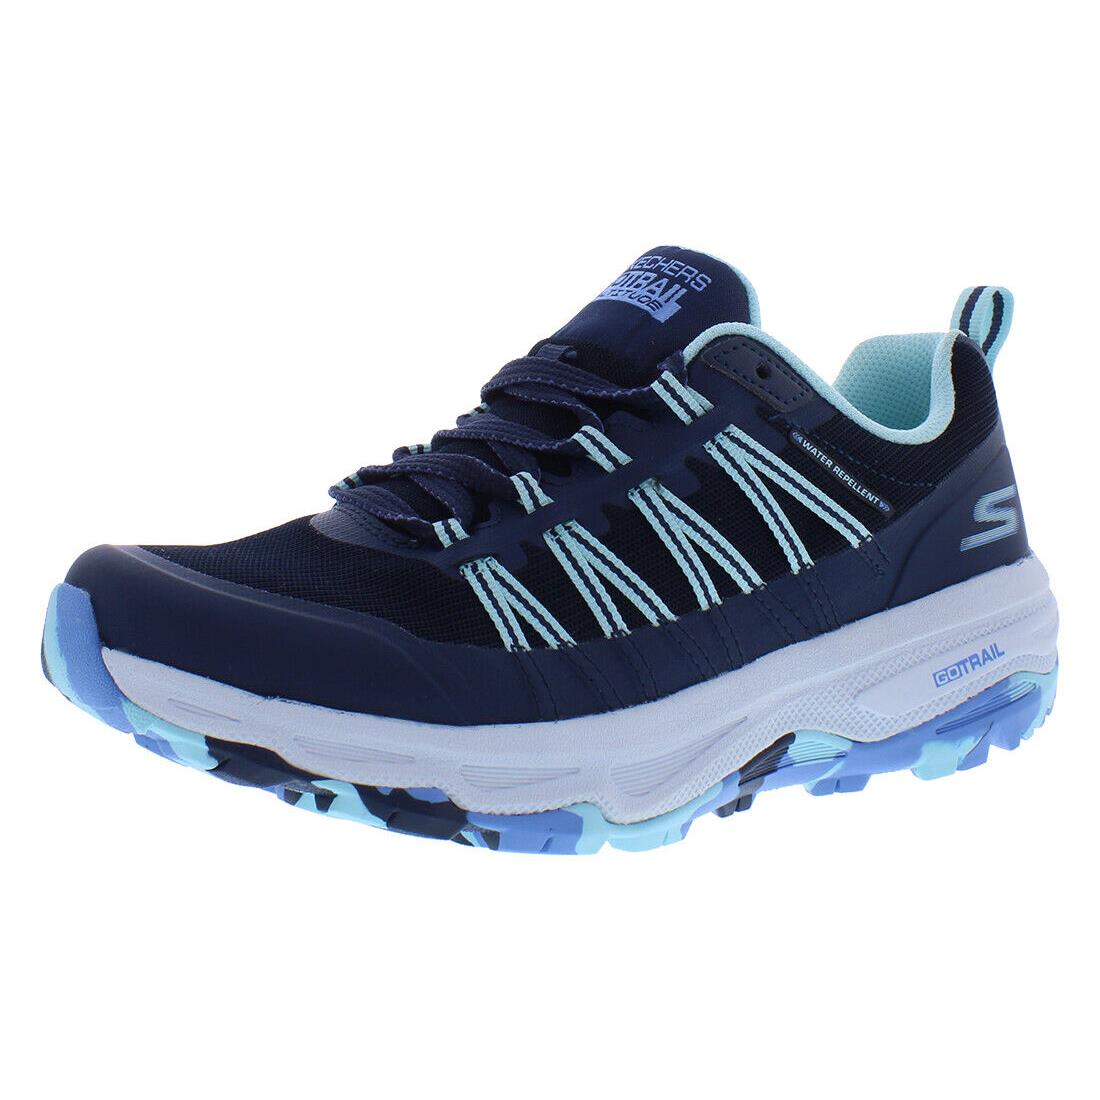 Skechers Go Run Trail Altitude Reaction Womens Shoes Size 5.5 Color: Navy/aqua - Navy/Aqua, Main: Blue